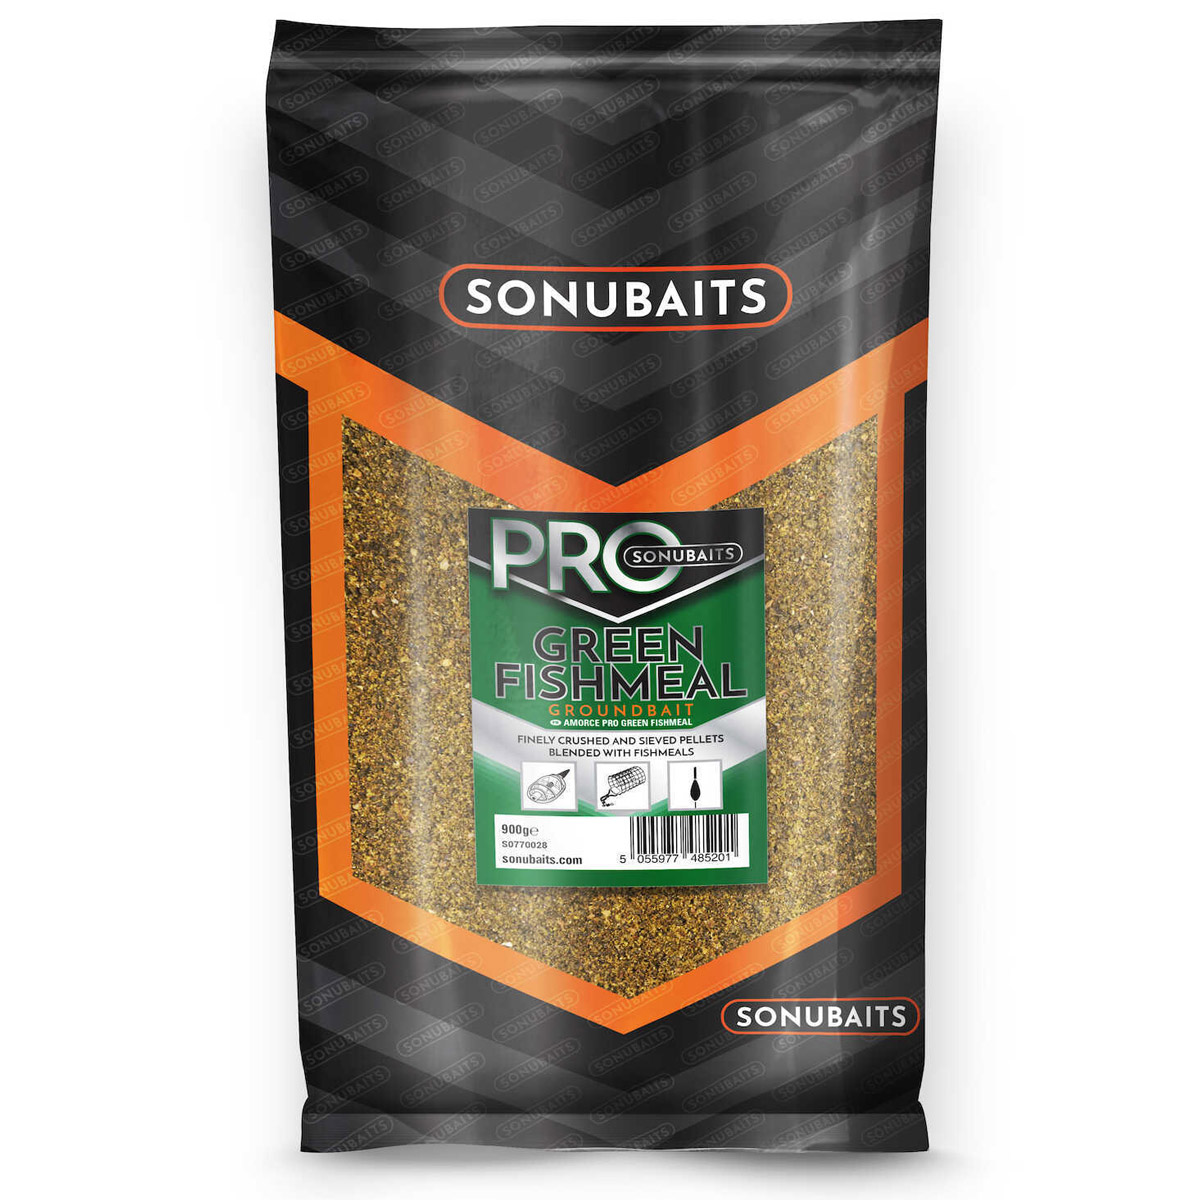 Sonubaits Pro Green Fishmeal Groundbait 900 Gram